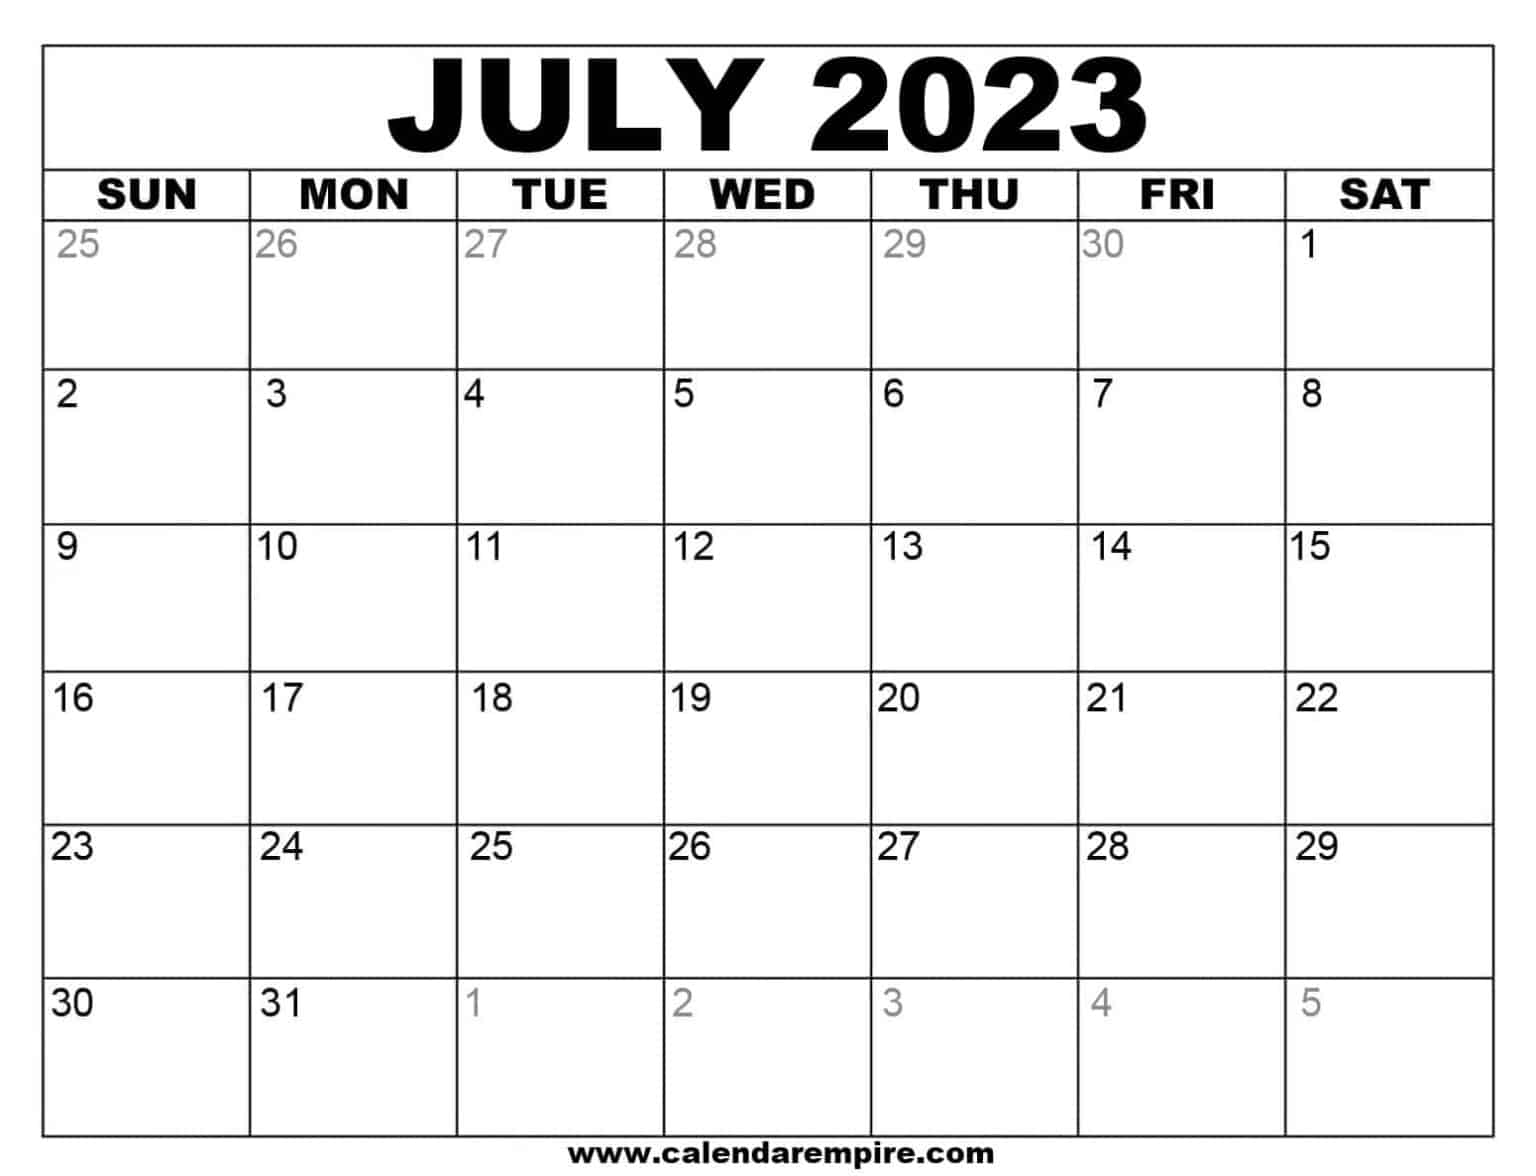 july-2023-calendar-free-printable-calendar-july-2023-monthly-printable-calendar-2023